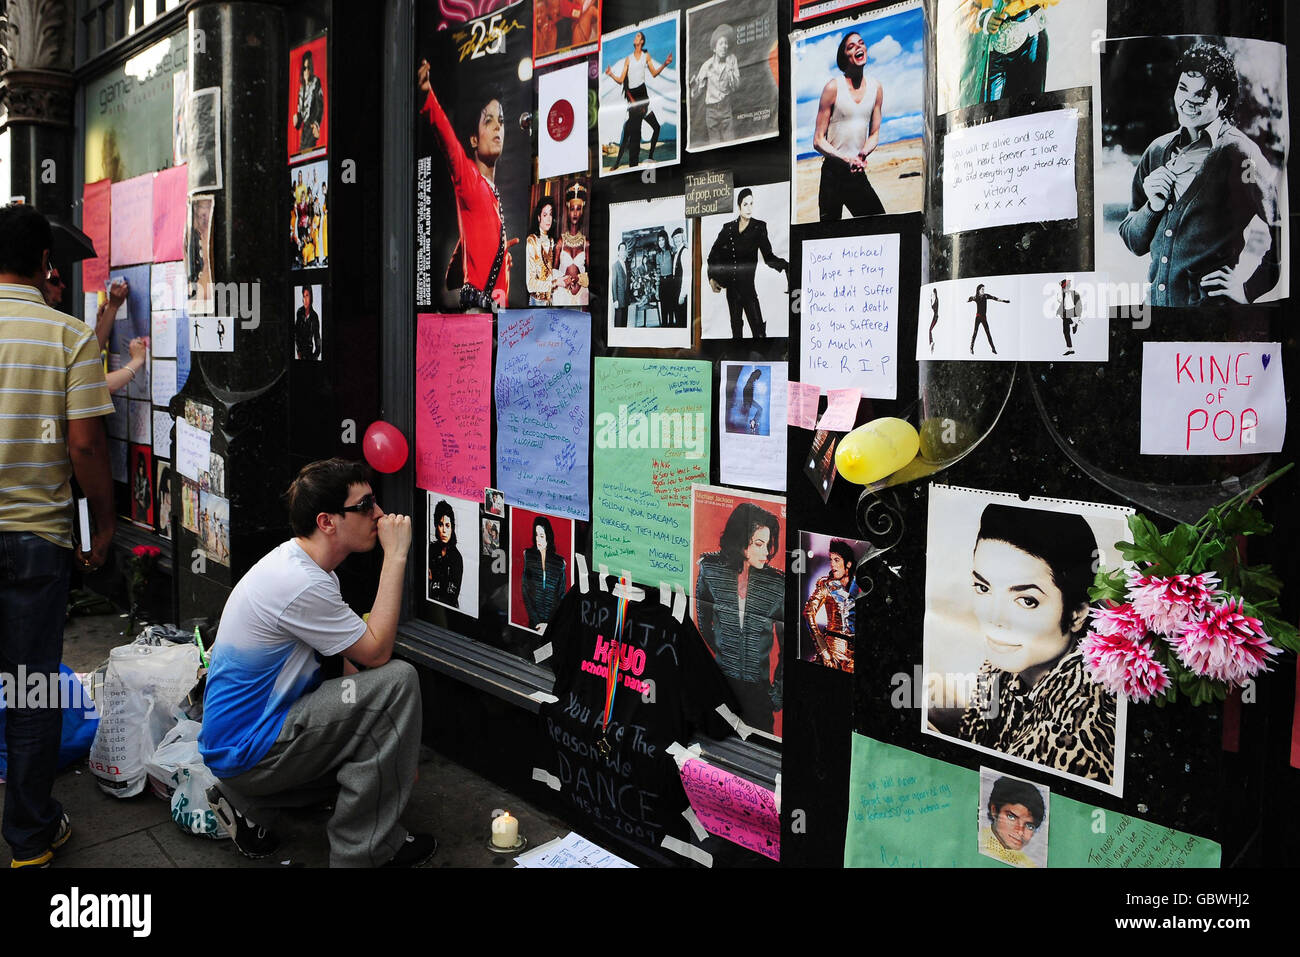 Michael Jackson: Life and death of Pop Idol